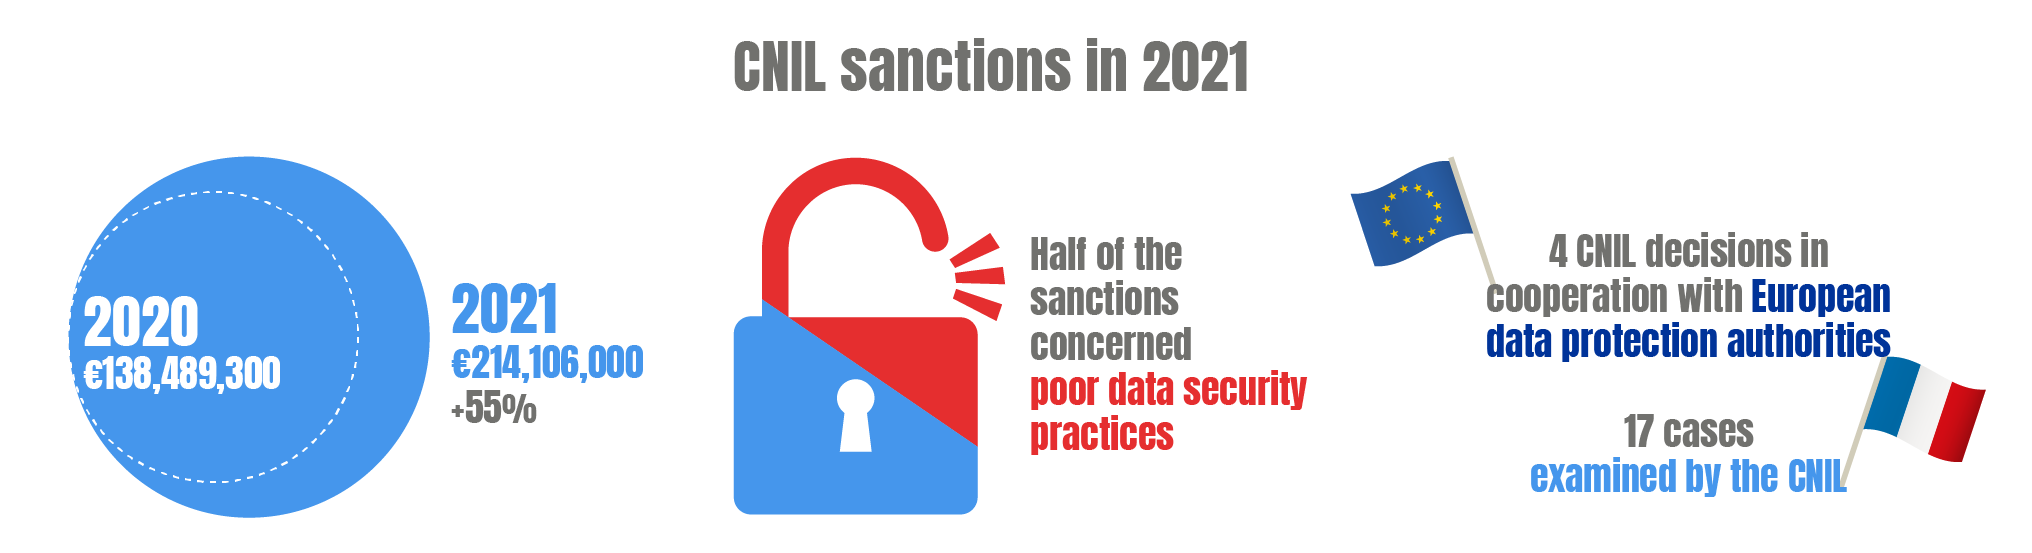 CNIL sanctions in 2021